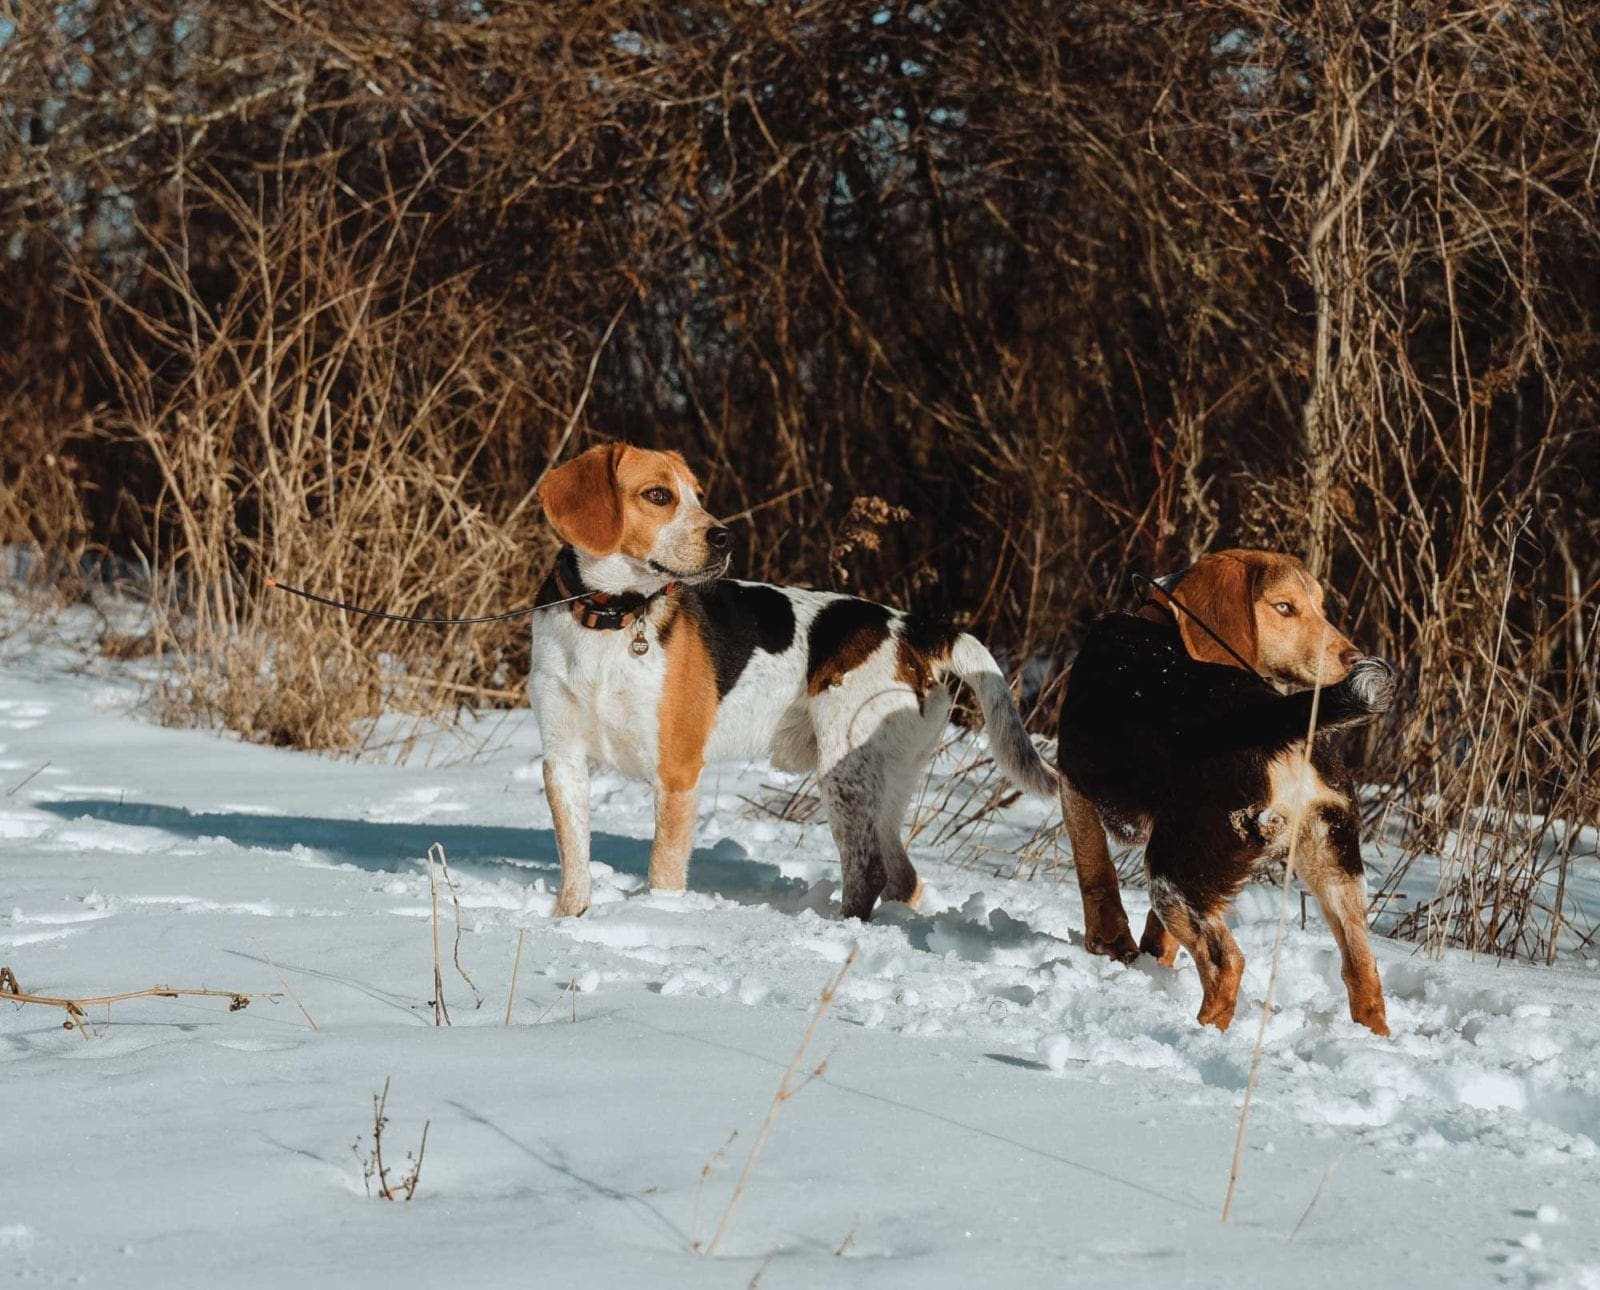 A pack of beagles hunting rabbits